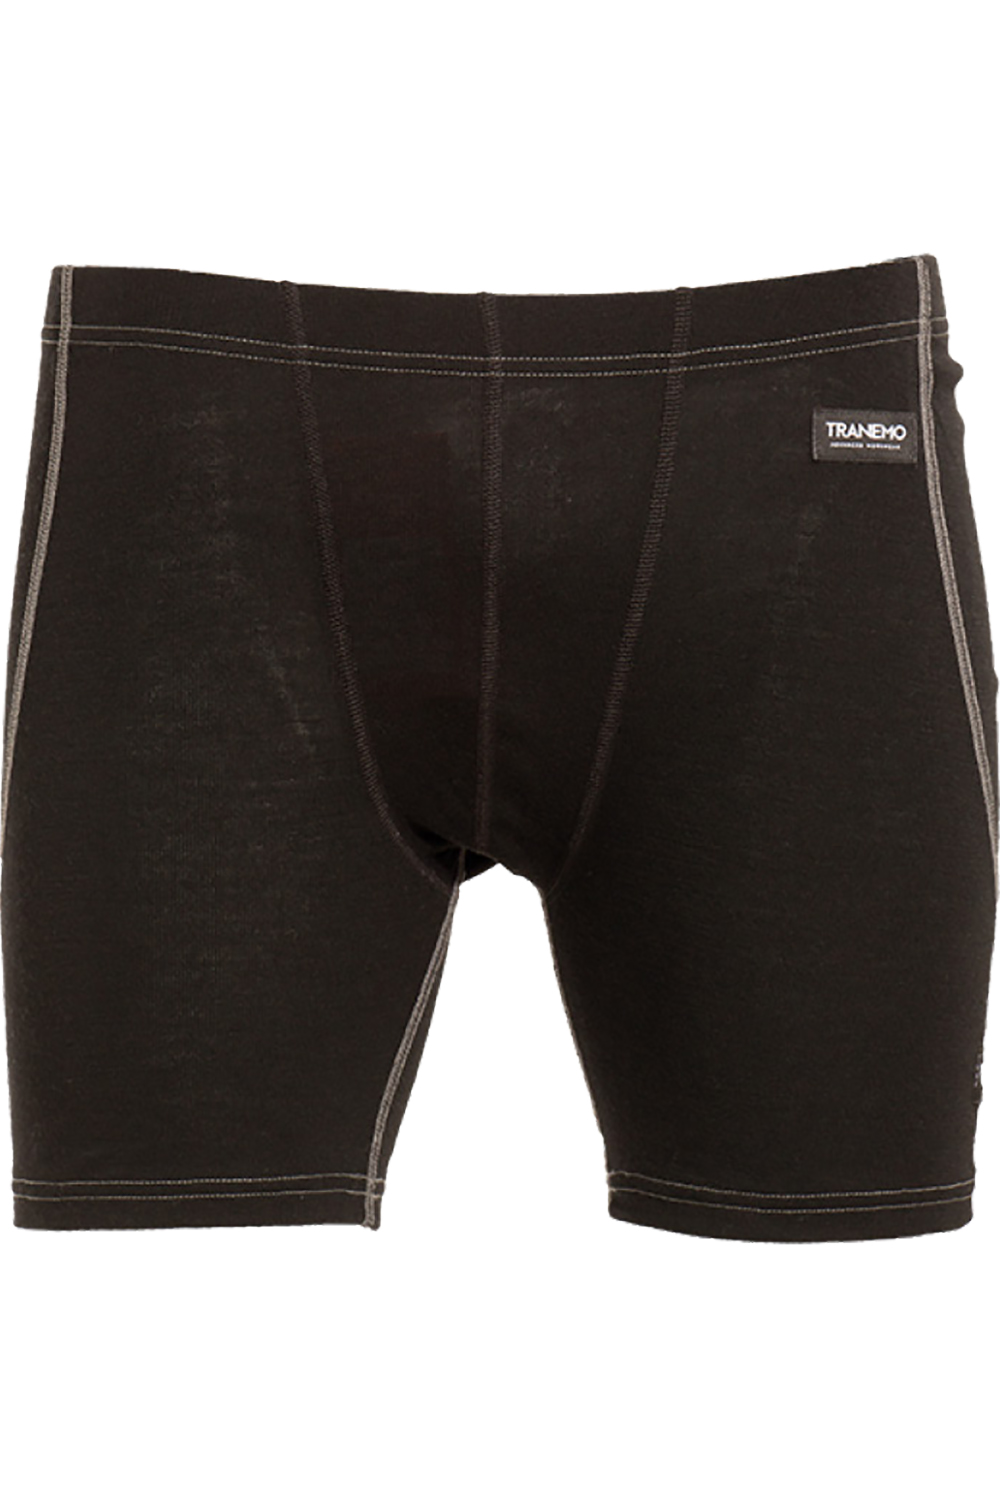 Undergarment FR Boxer Short  6310 90 / Tranemo / Workwear